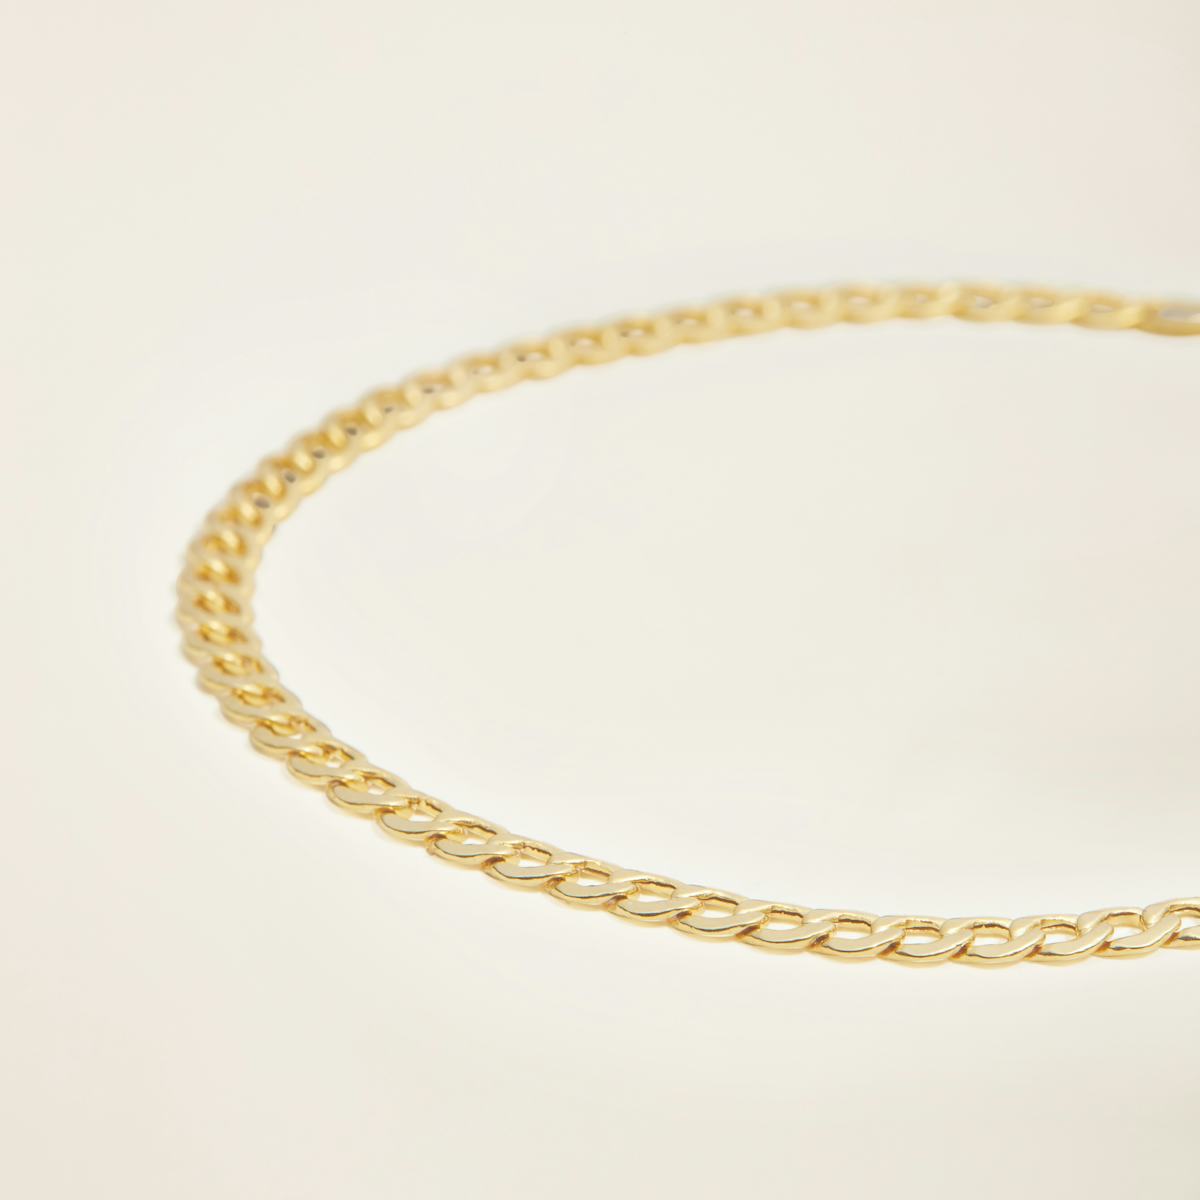 14K Gold Curb Chain Bracelet - 7.5__A_6708_Edited_Edited.jpg